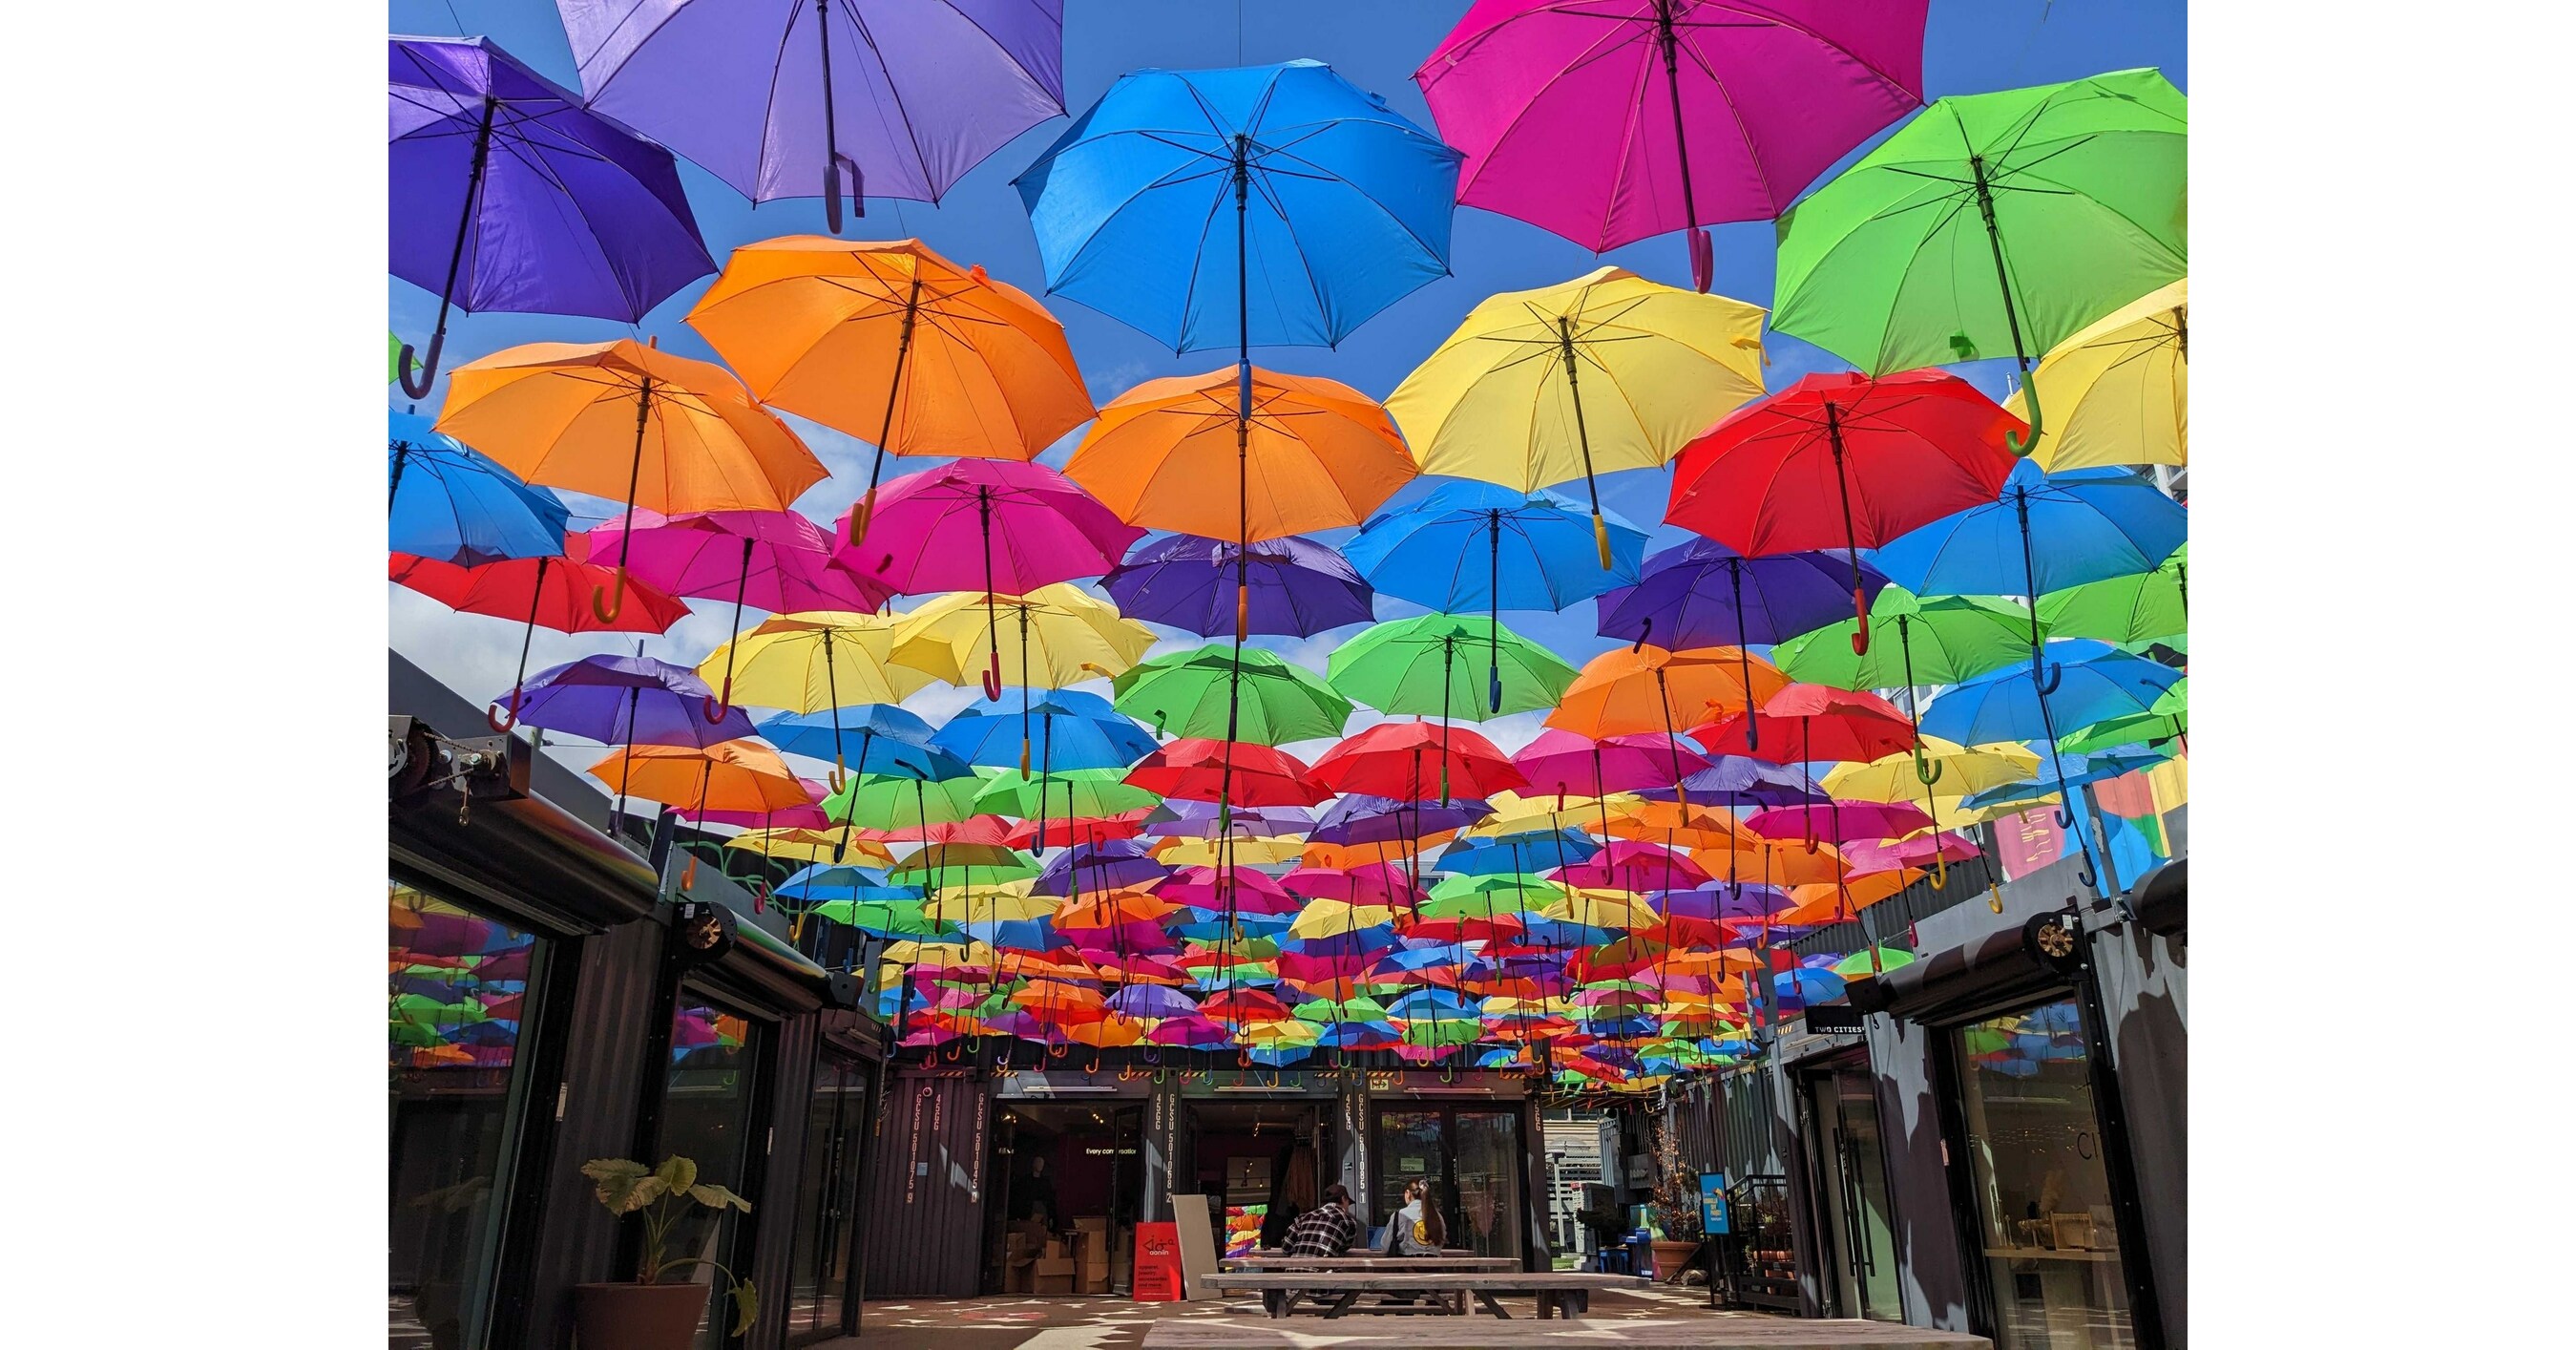 Umbrella Sky Project raises sun safety awareness in Toronto